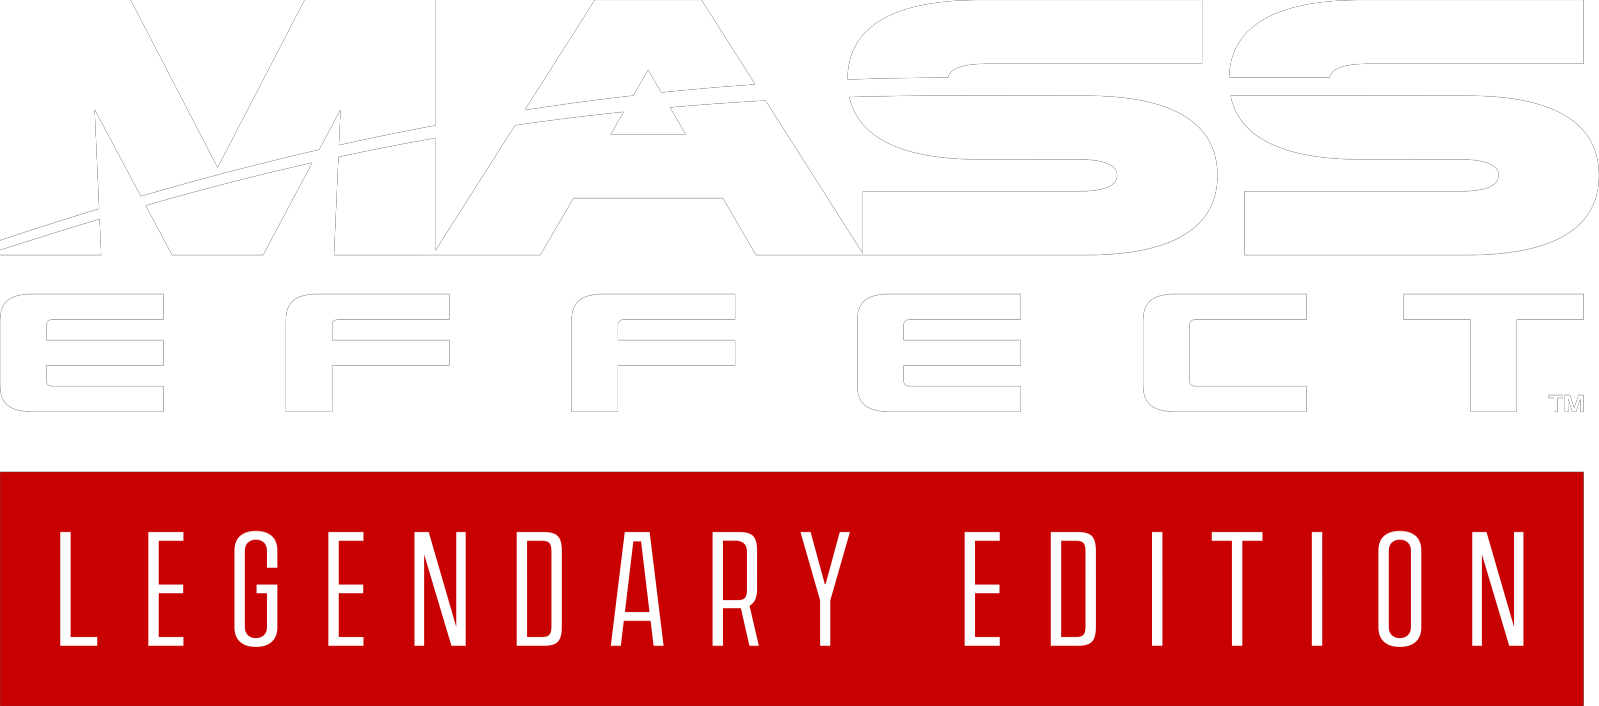 Mass Effect Legendary Edition 100% Achievement Guide image 8